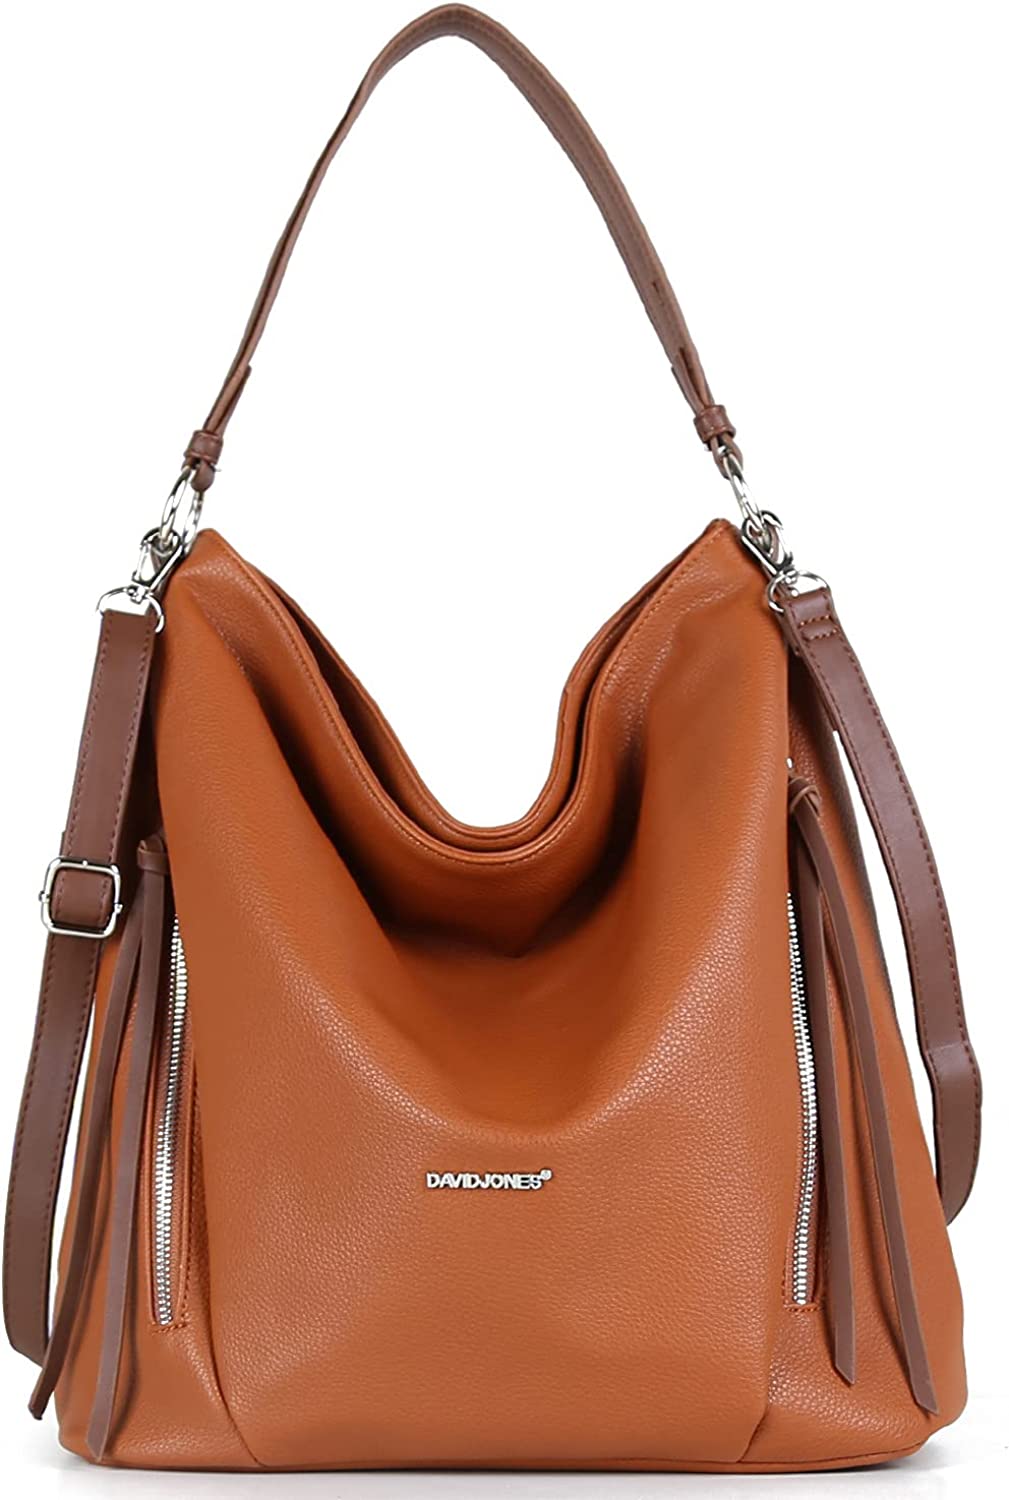 David Jones - Women's handbag handbag - Women's PU leather